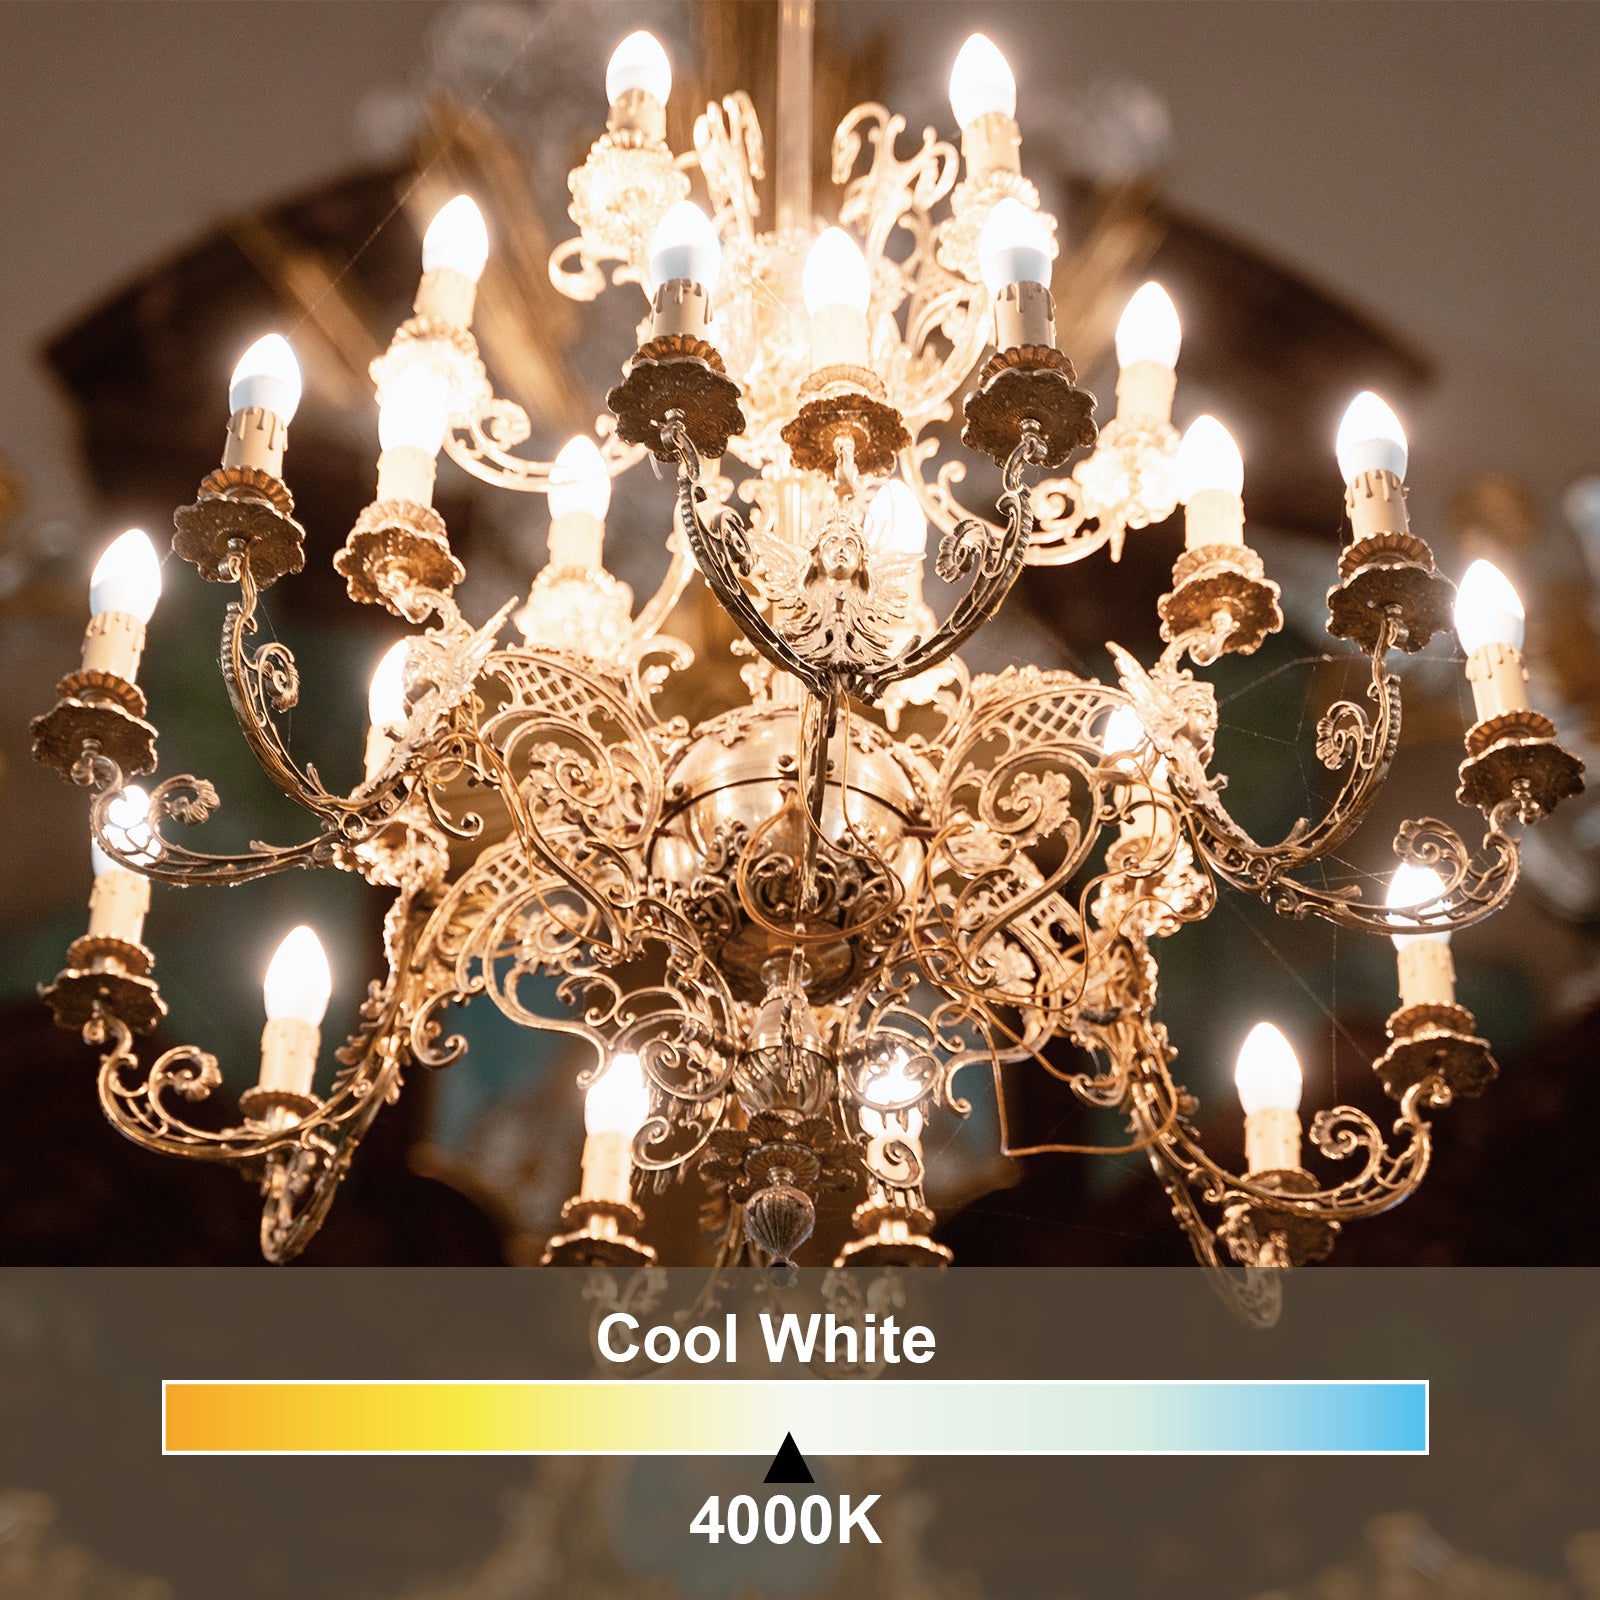 LED Candle 4.9W (40w), BC/B22, 470 Lumens, Cool White(4000K), 240V